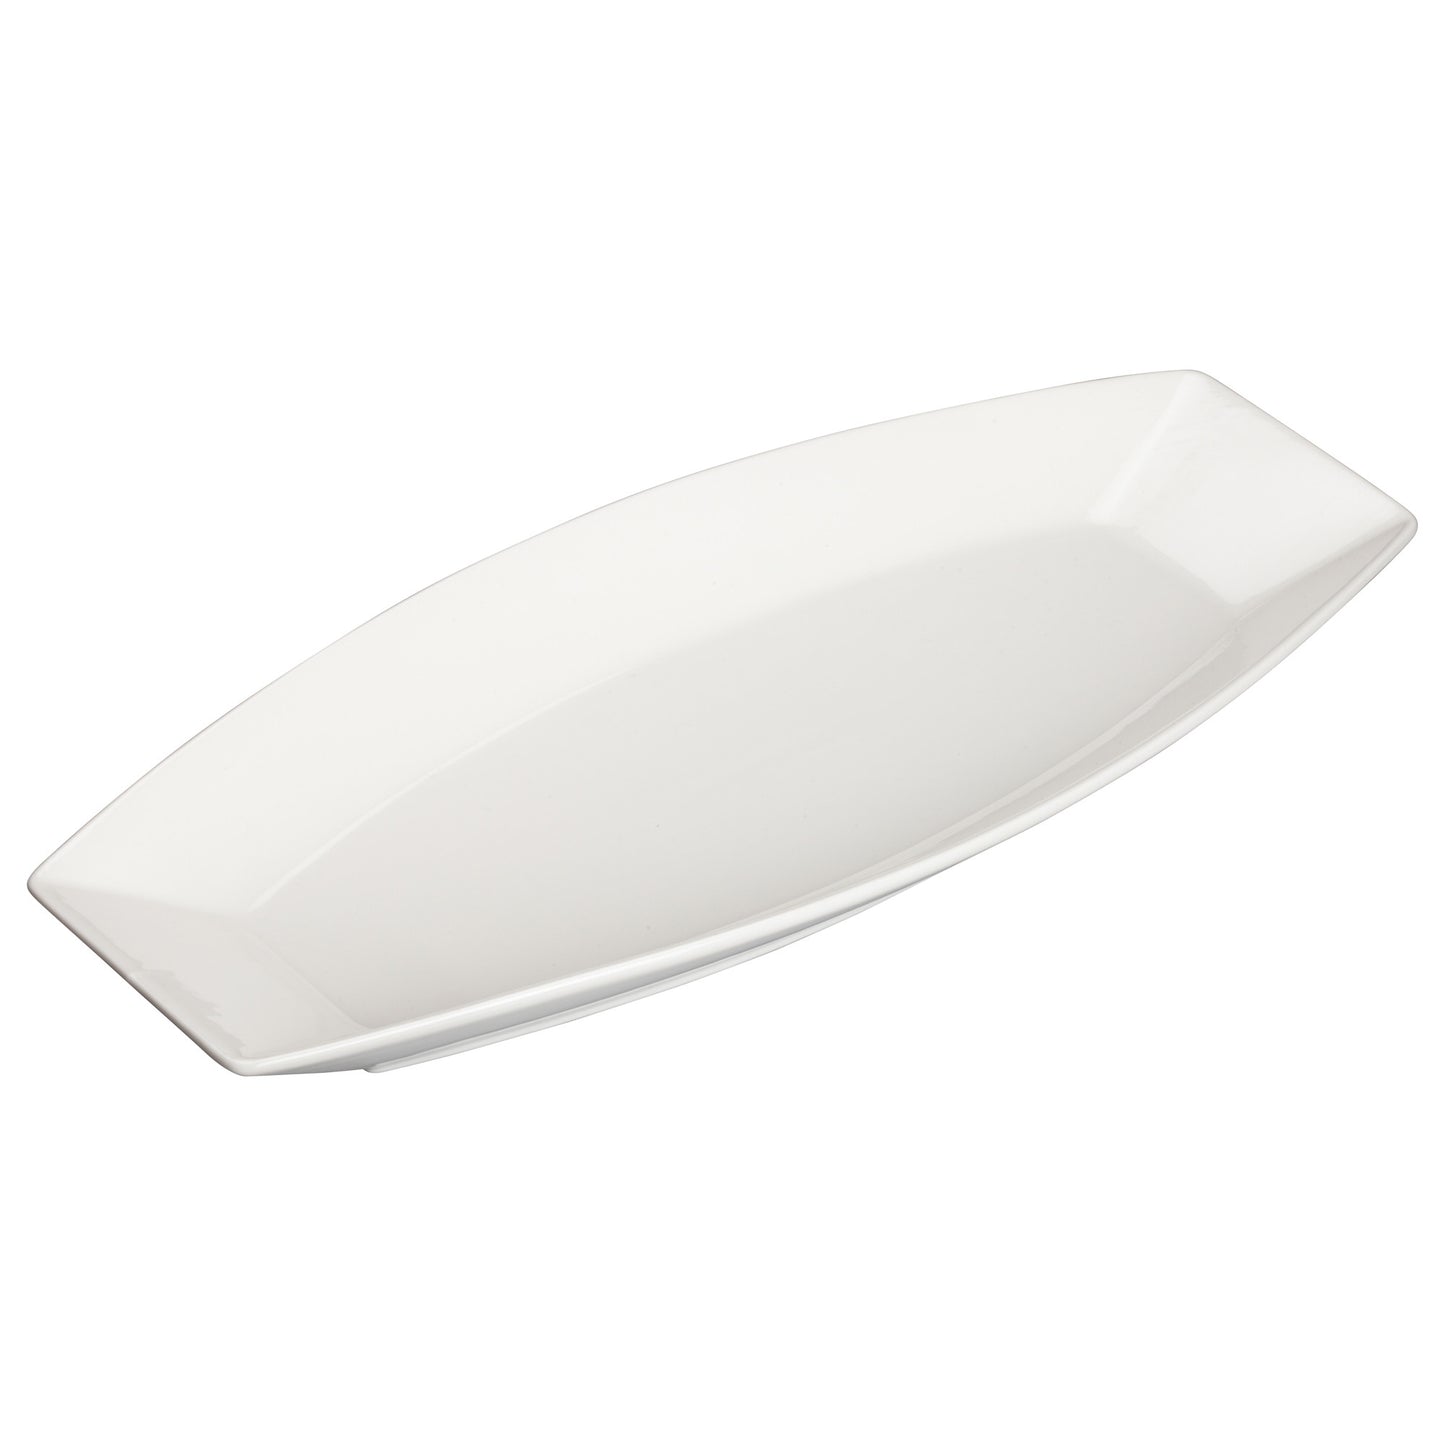 WDP017-110 - 15-1/4" x 6-1/2" Porcelain Oval Plate, Bright White, 12 pcs/case